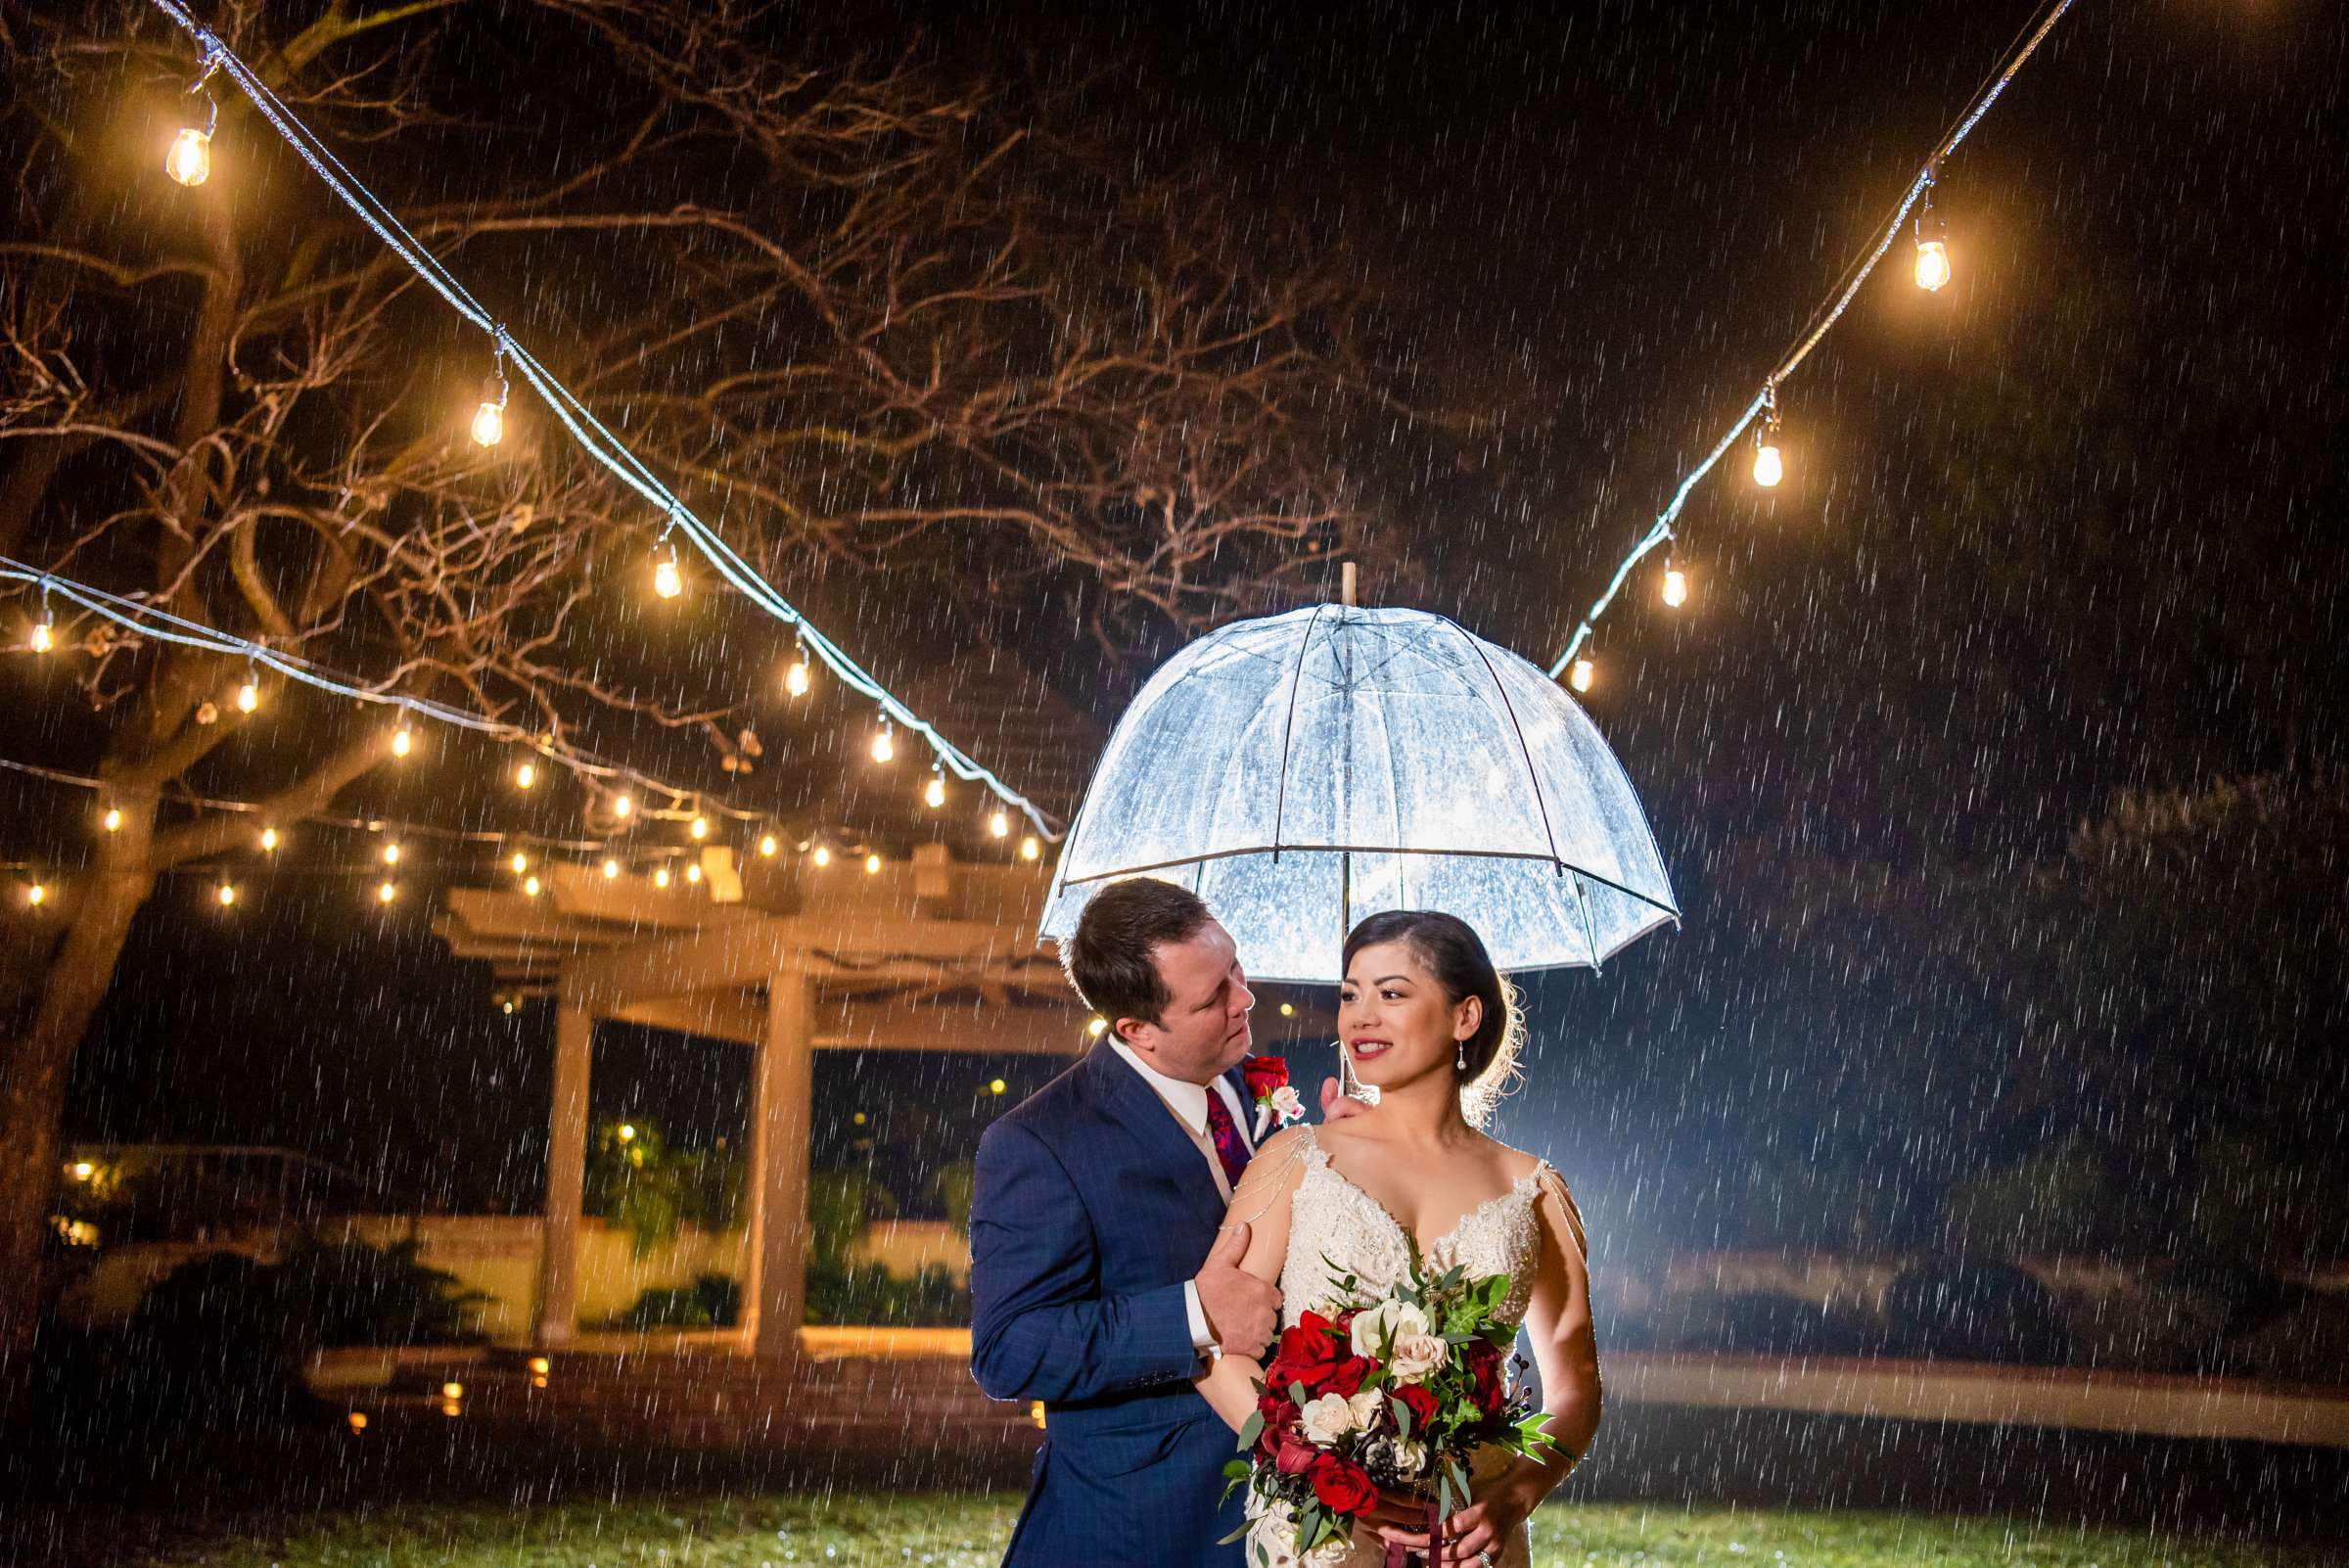 Rainy Day, Photographers Favorite at The Secret Garden at Rancho Santa Fe Wedding, Jennifer and Michael Wedding Photo #1 by True Photography